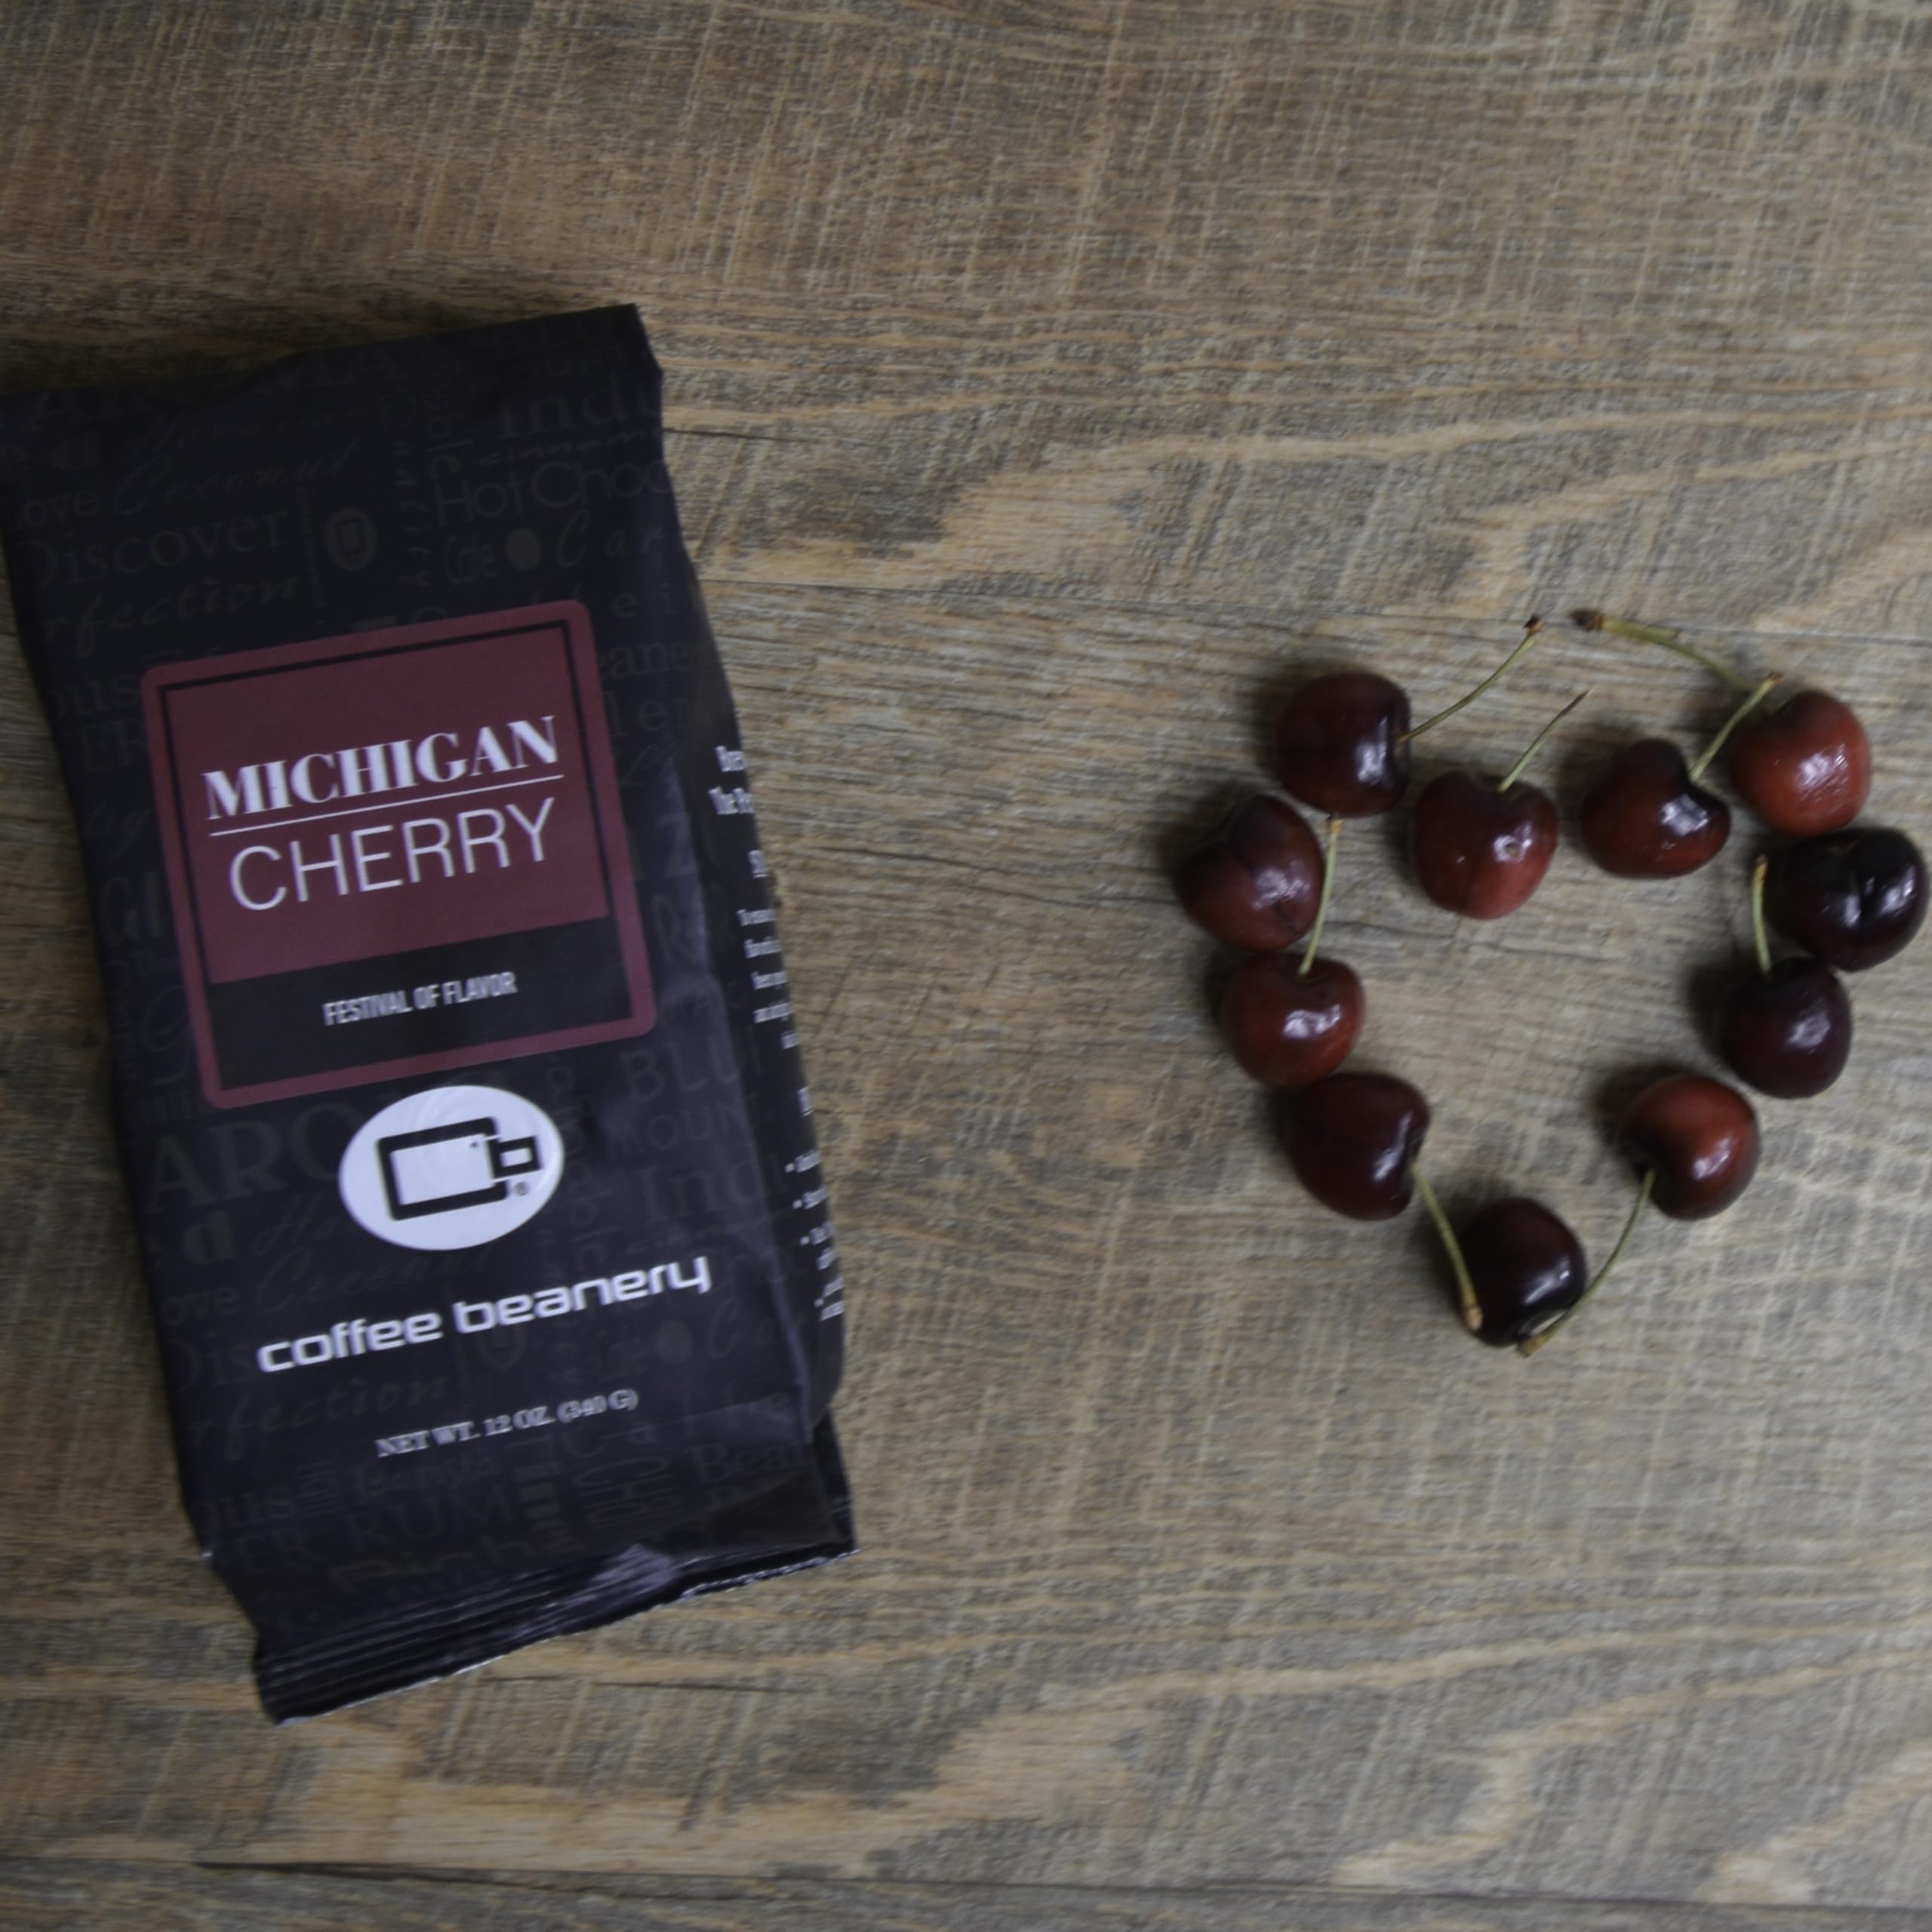 Michigan Cherry by Coffee Beanery | 12oz Flavored Whole Bean Coffee Medium Roast Coffee | 100% Specialty Arabica Coffee Whole Bean | Gourmet Coffee Whole Beans